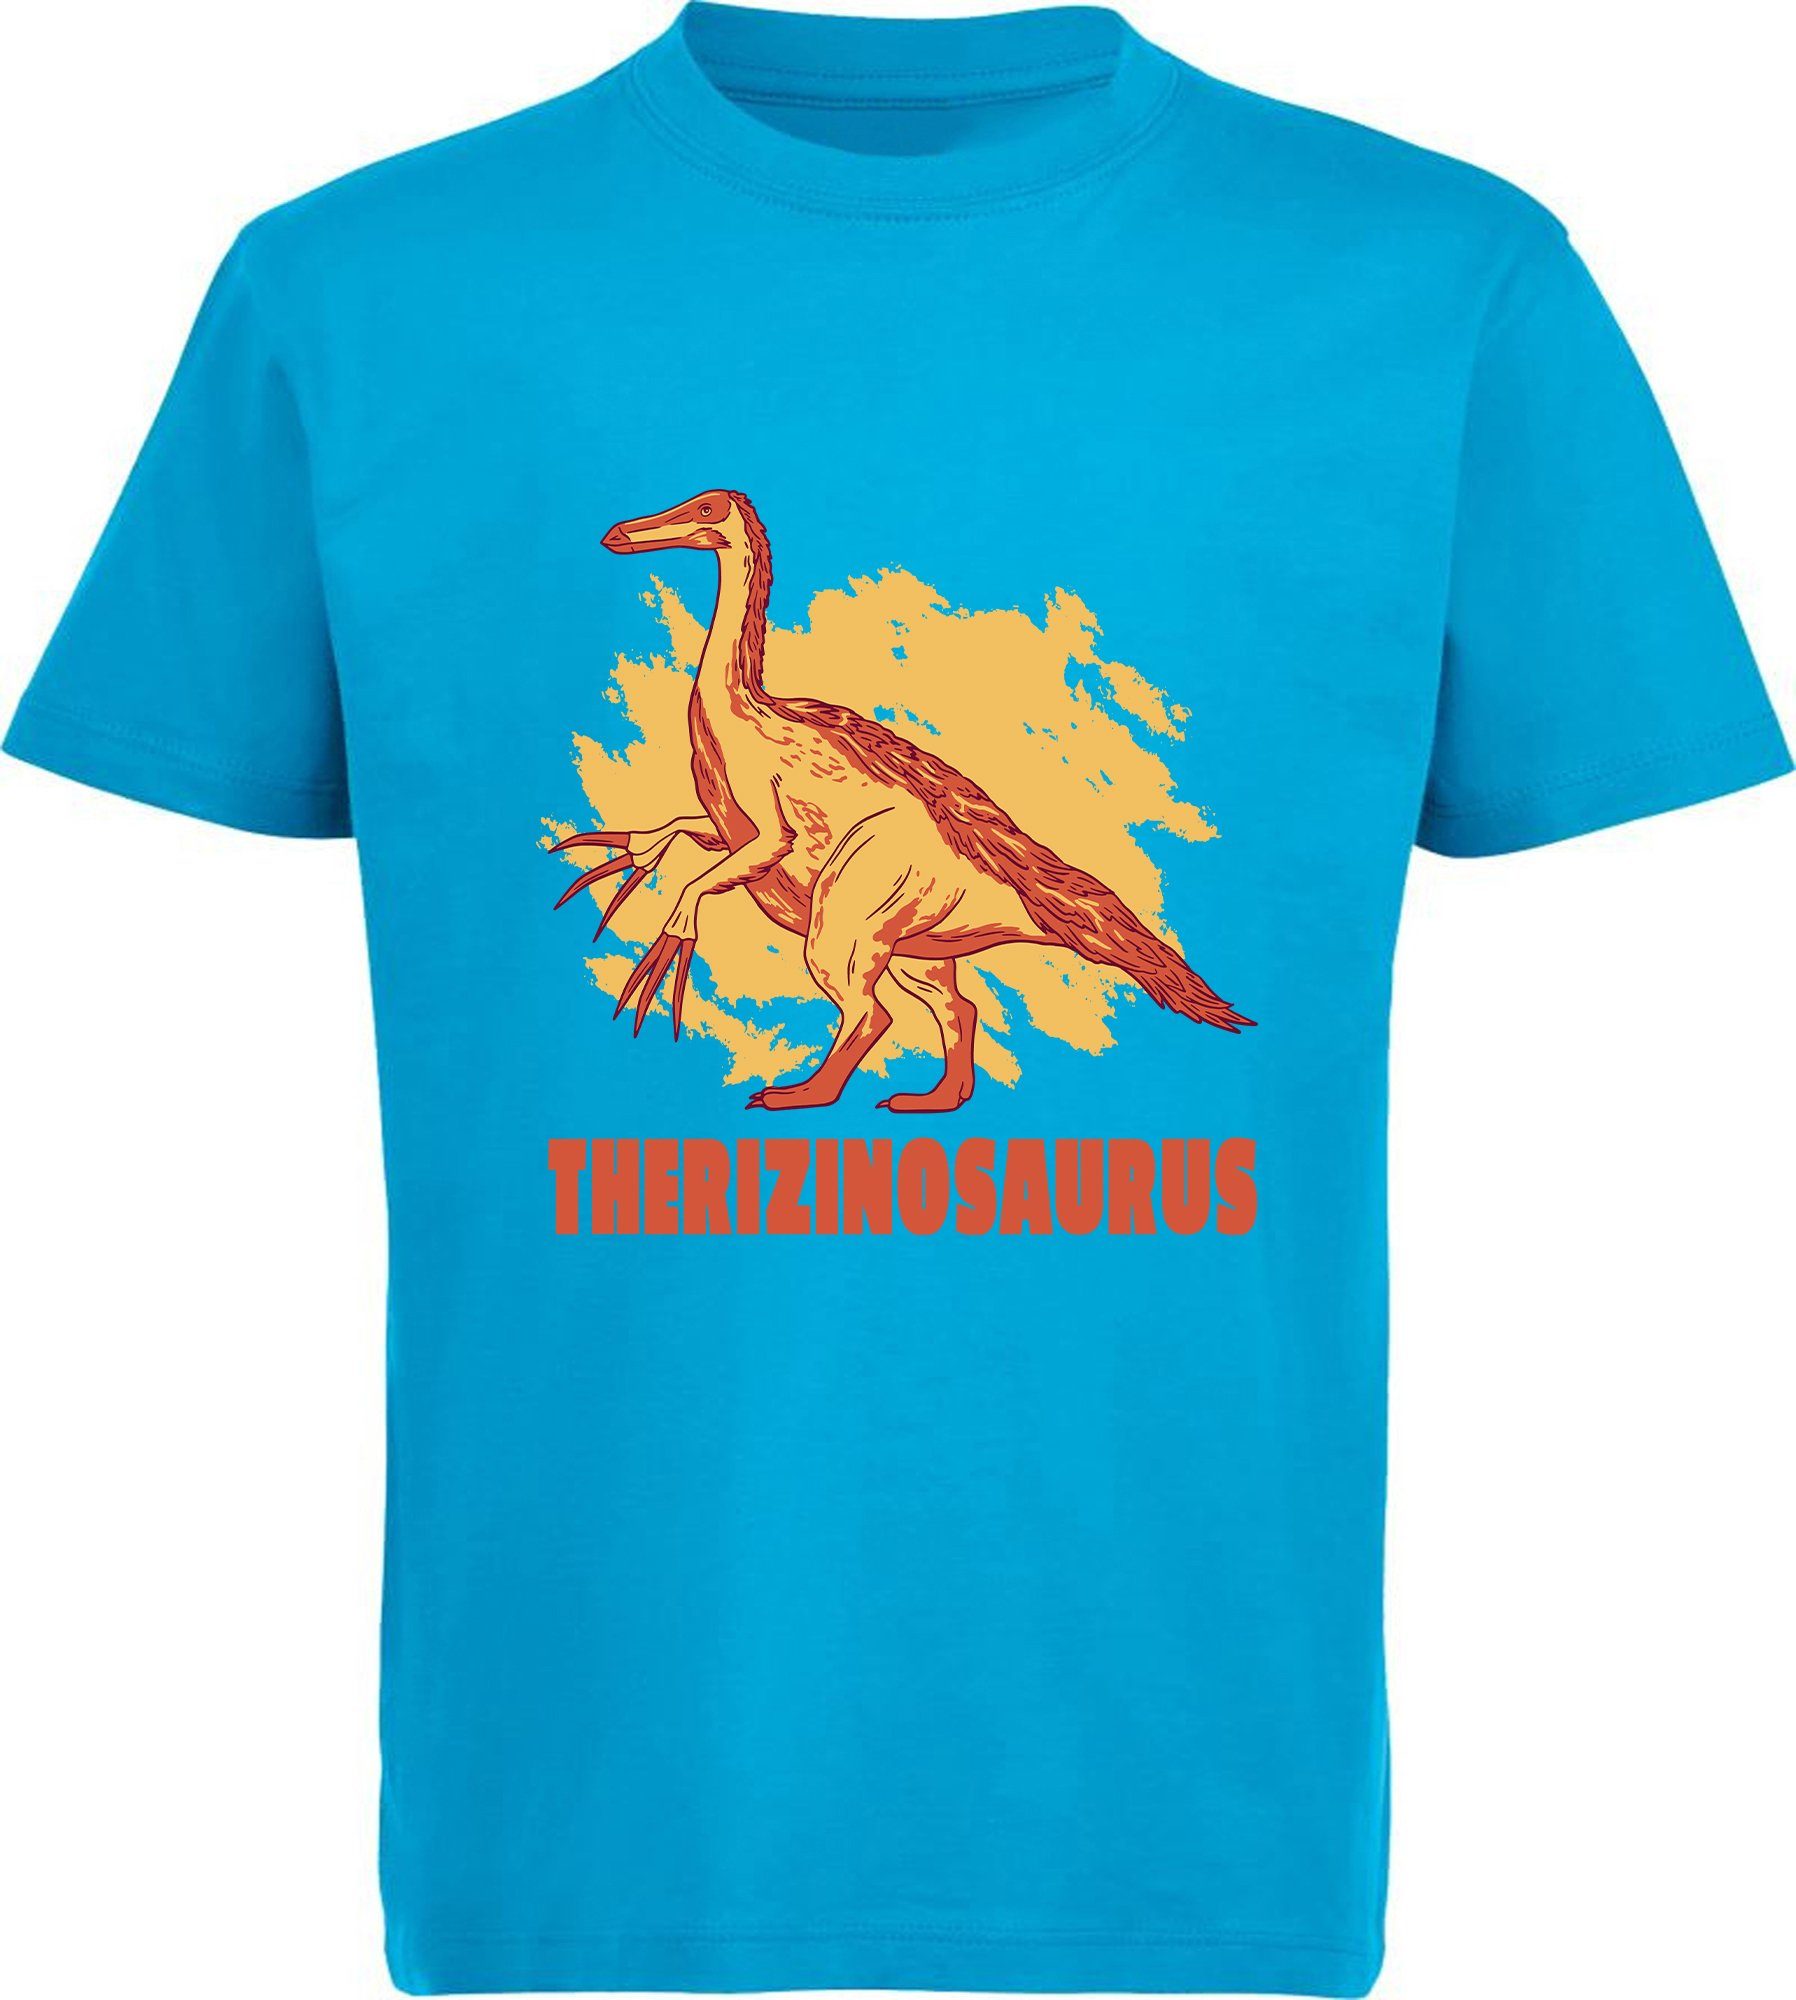 MyDesign24 Print-Shirt bedrucktes Kinder T-Shirt mit Therizinosaurus Baumwollshirt mit Dino, schwarz, weiß, rot, blau, i87 aqua blau